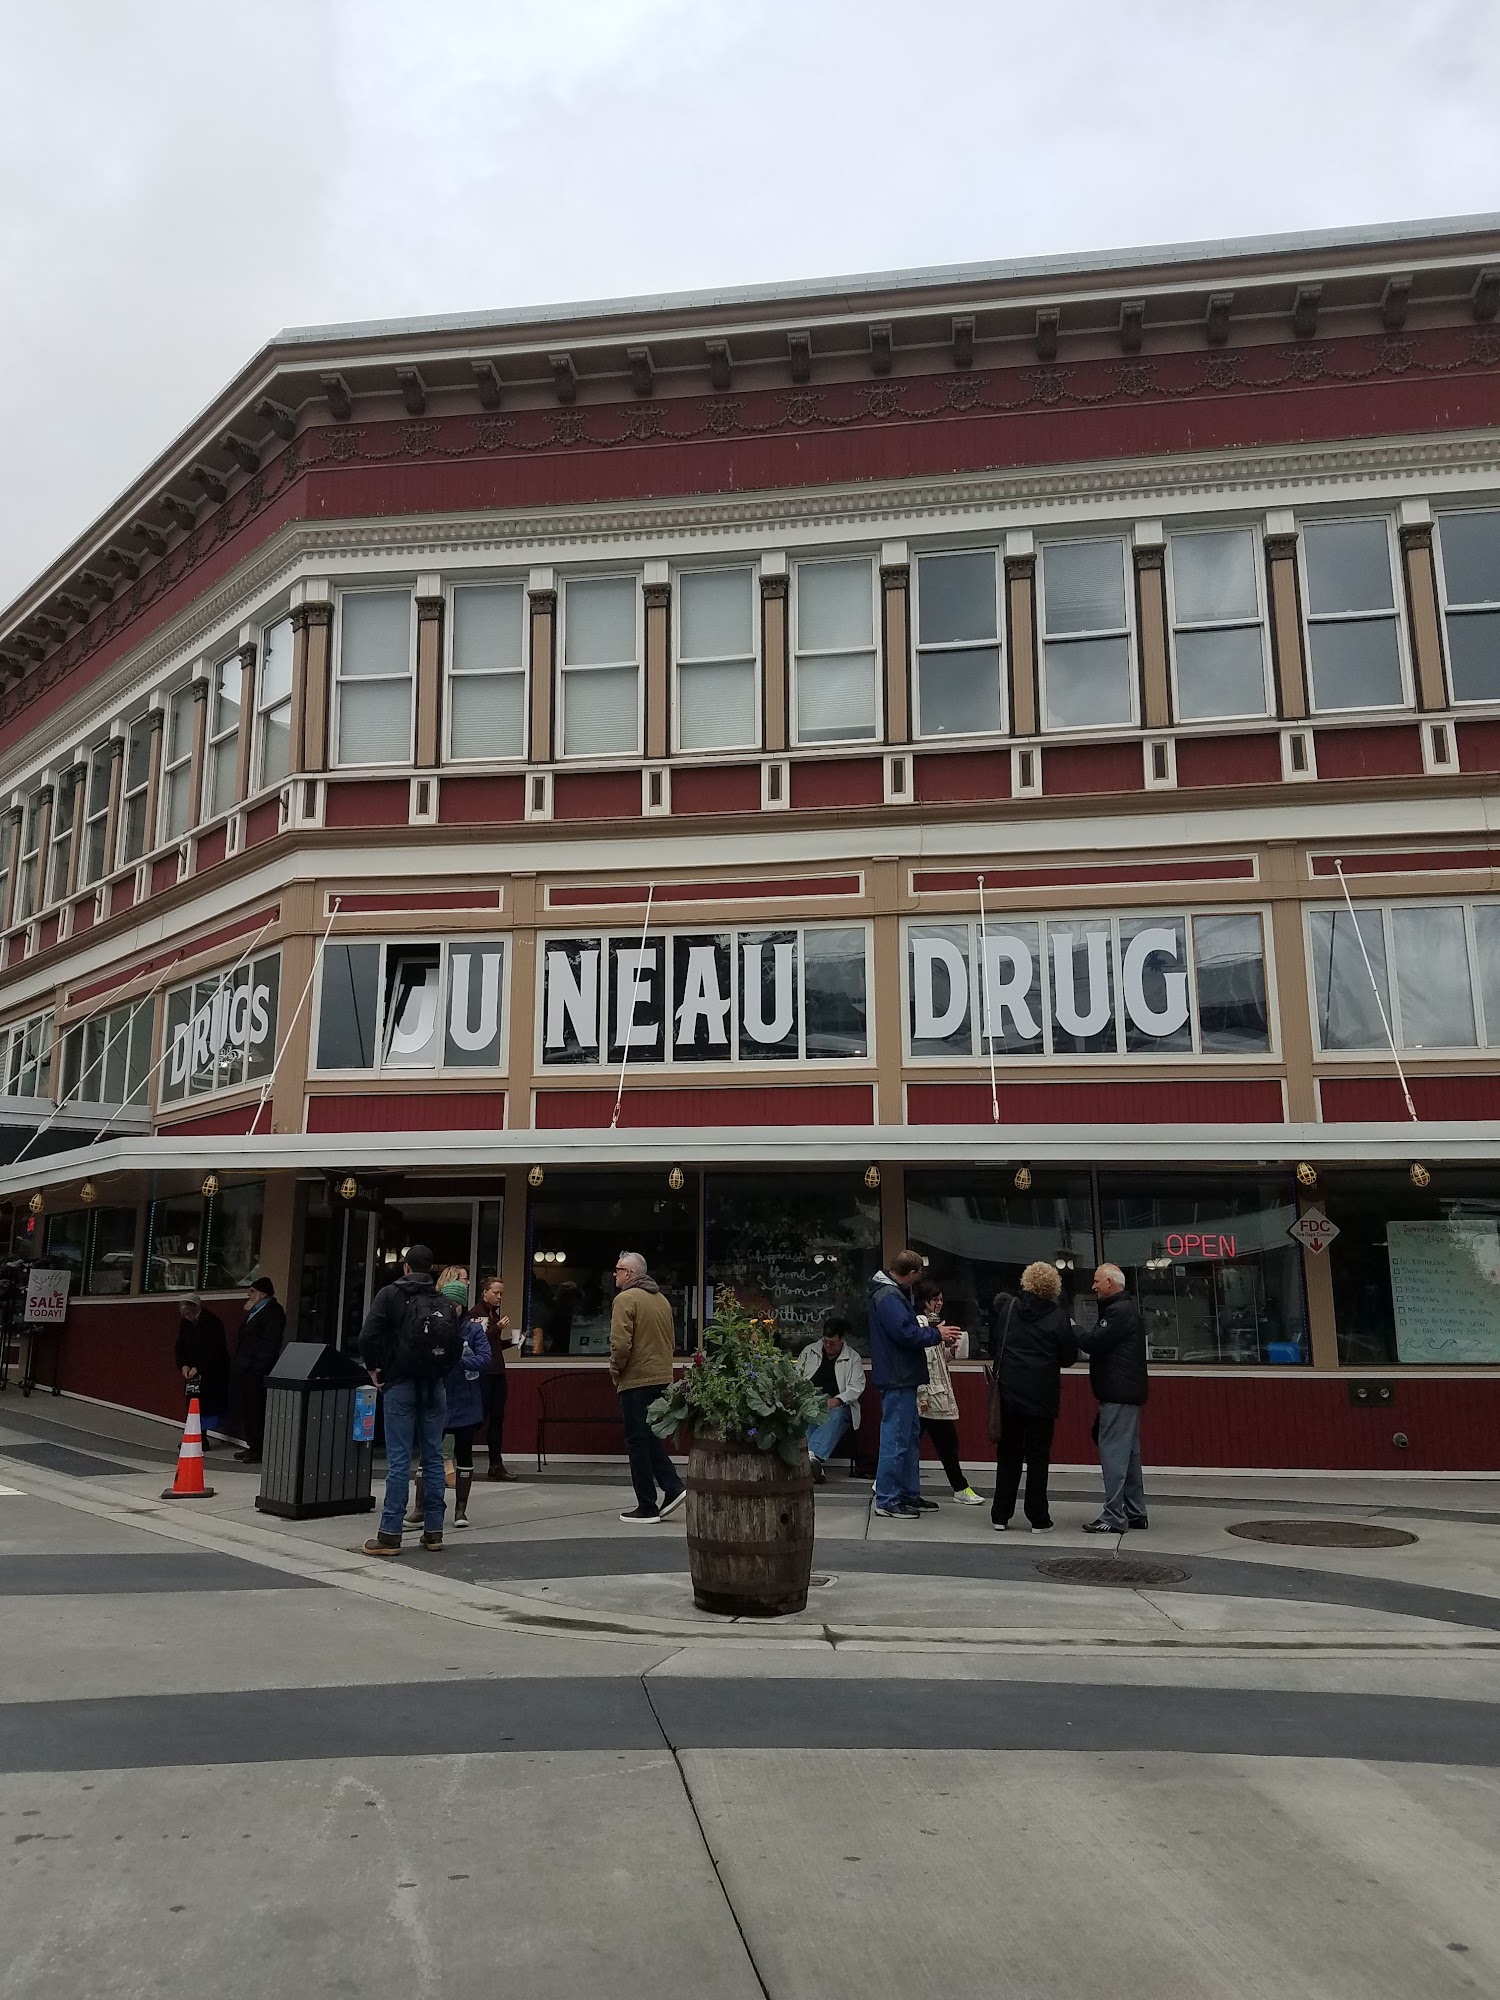 Juneau Drug Co Inc